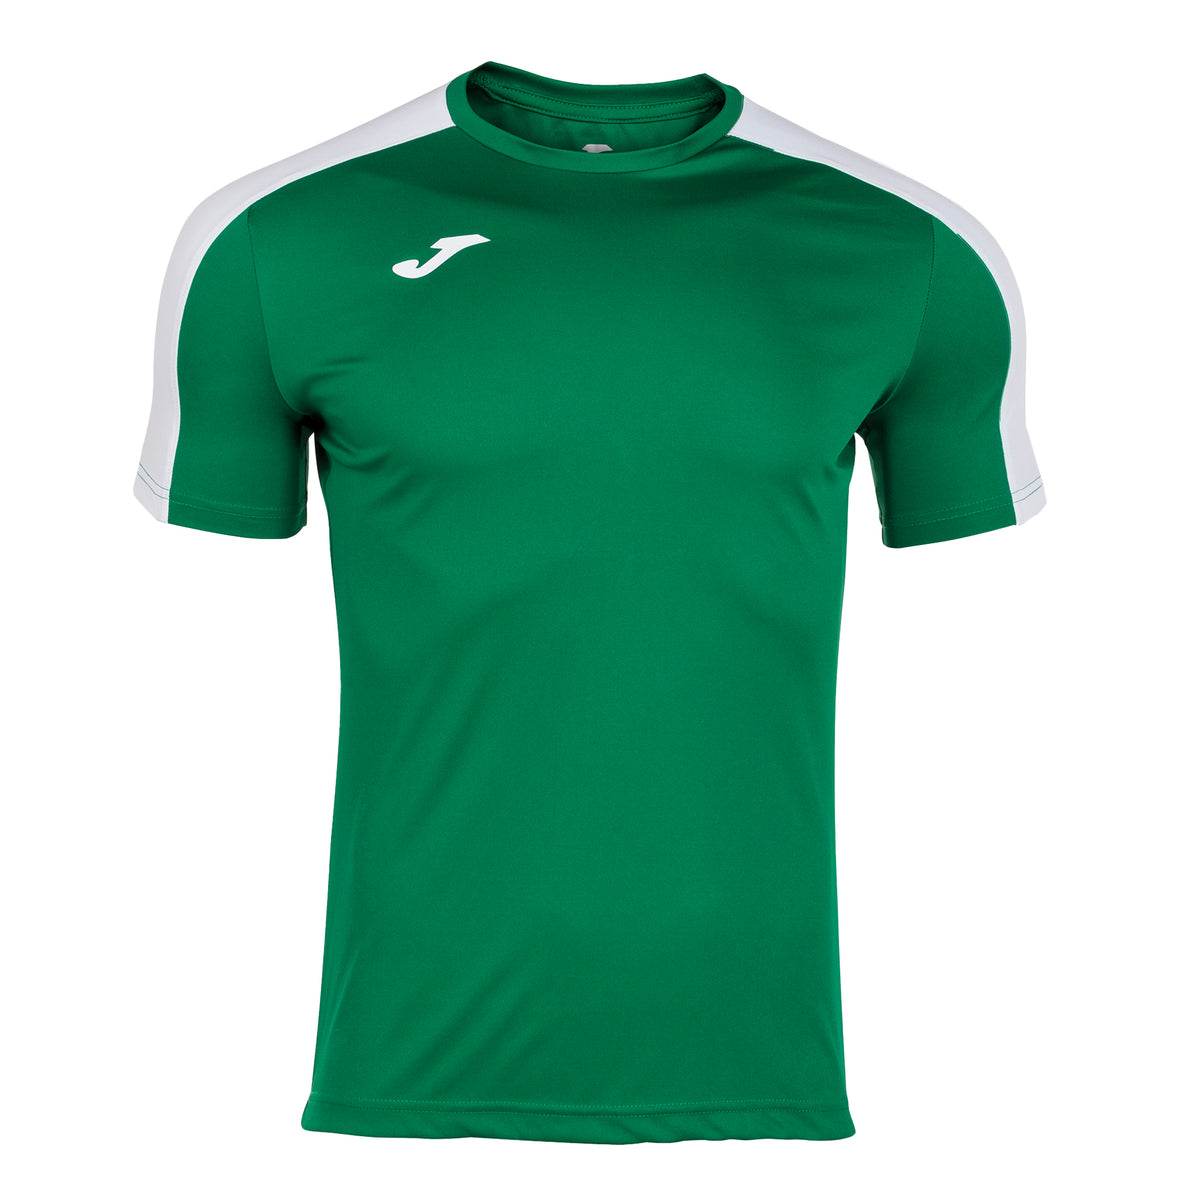 Joma Academy III Junior S/S Football Shirt: Green/White